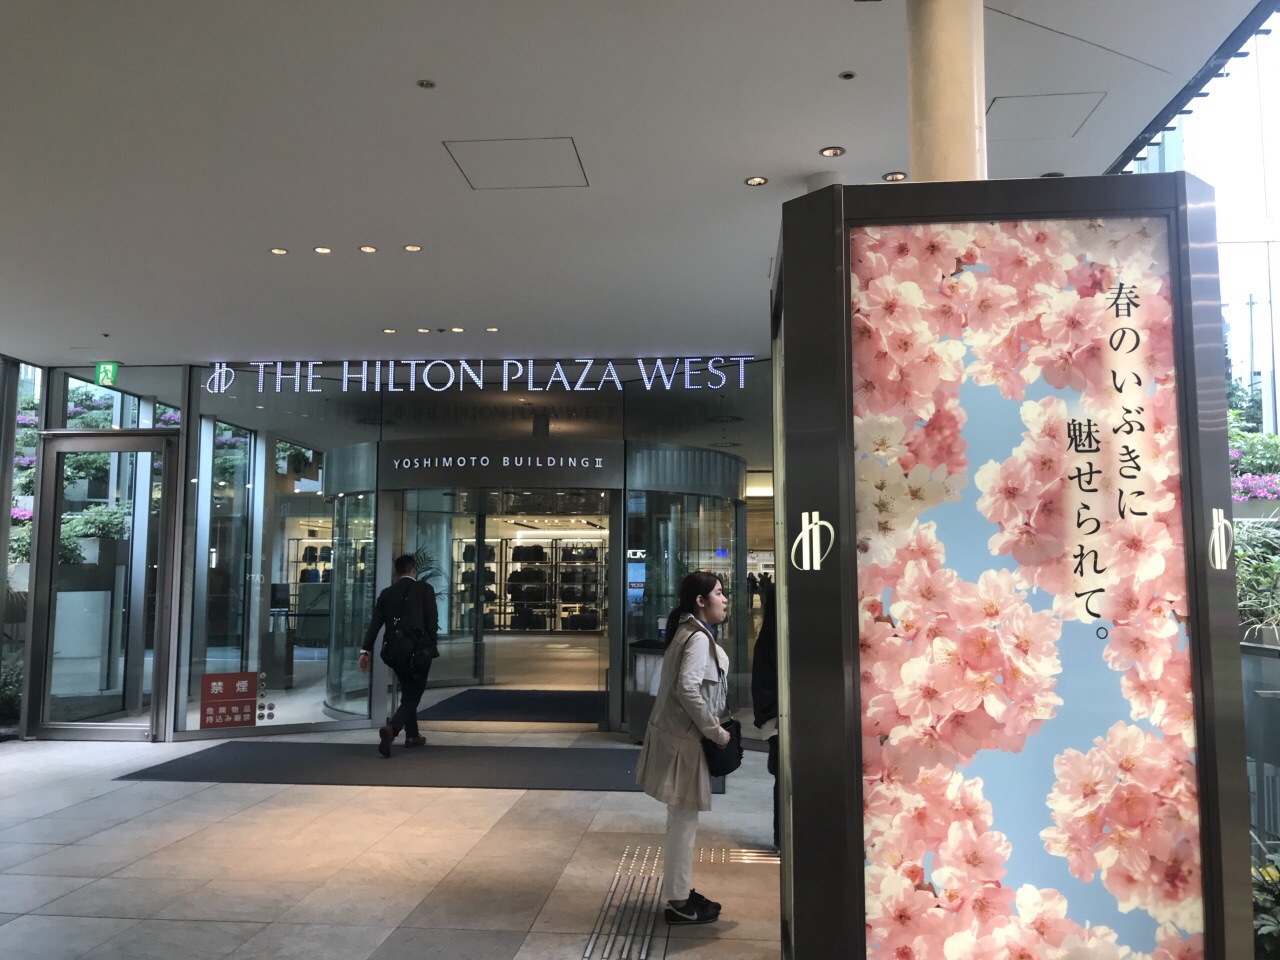 大阪hilton Plaza Osaka East West购物攻略 Hilton Plaza Osaka East West物中心 地址 电话 营业时间 携程攻略